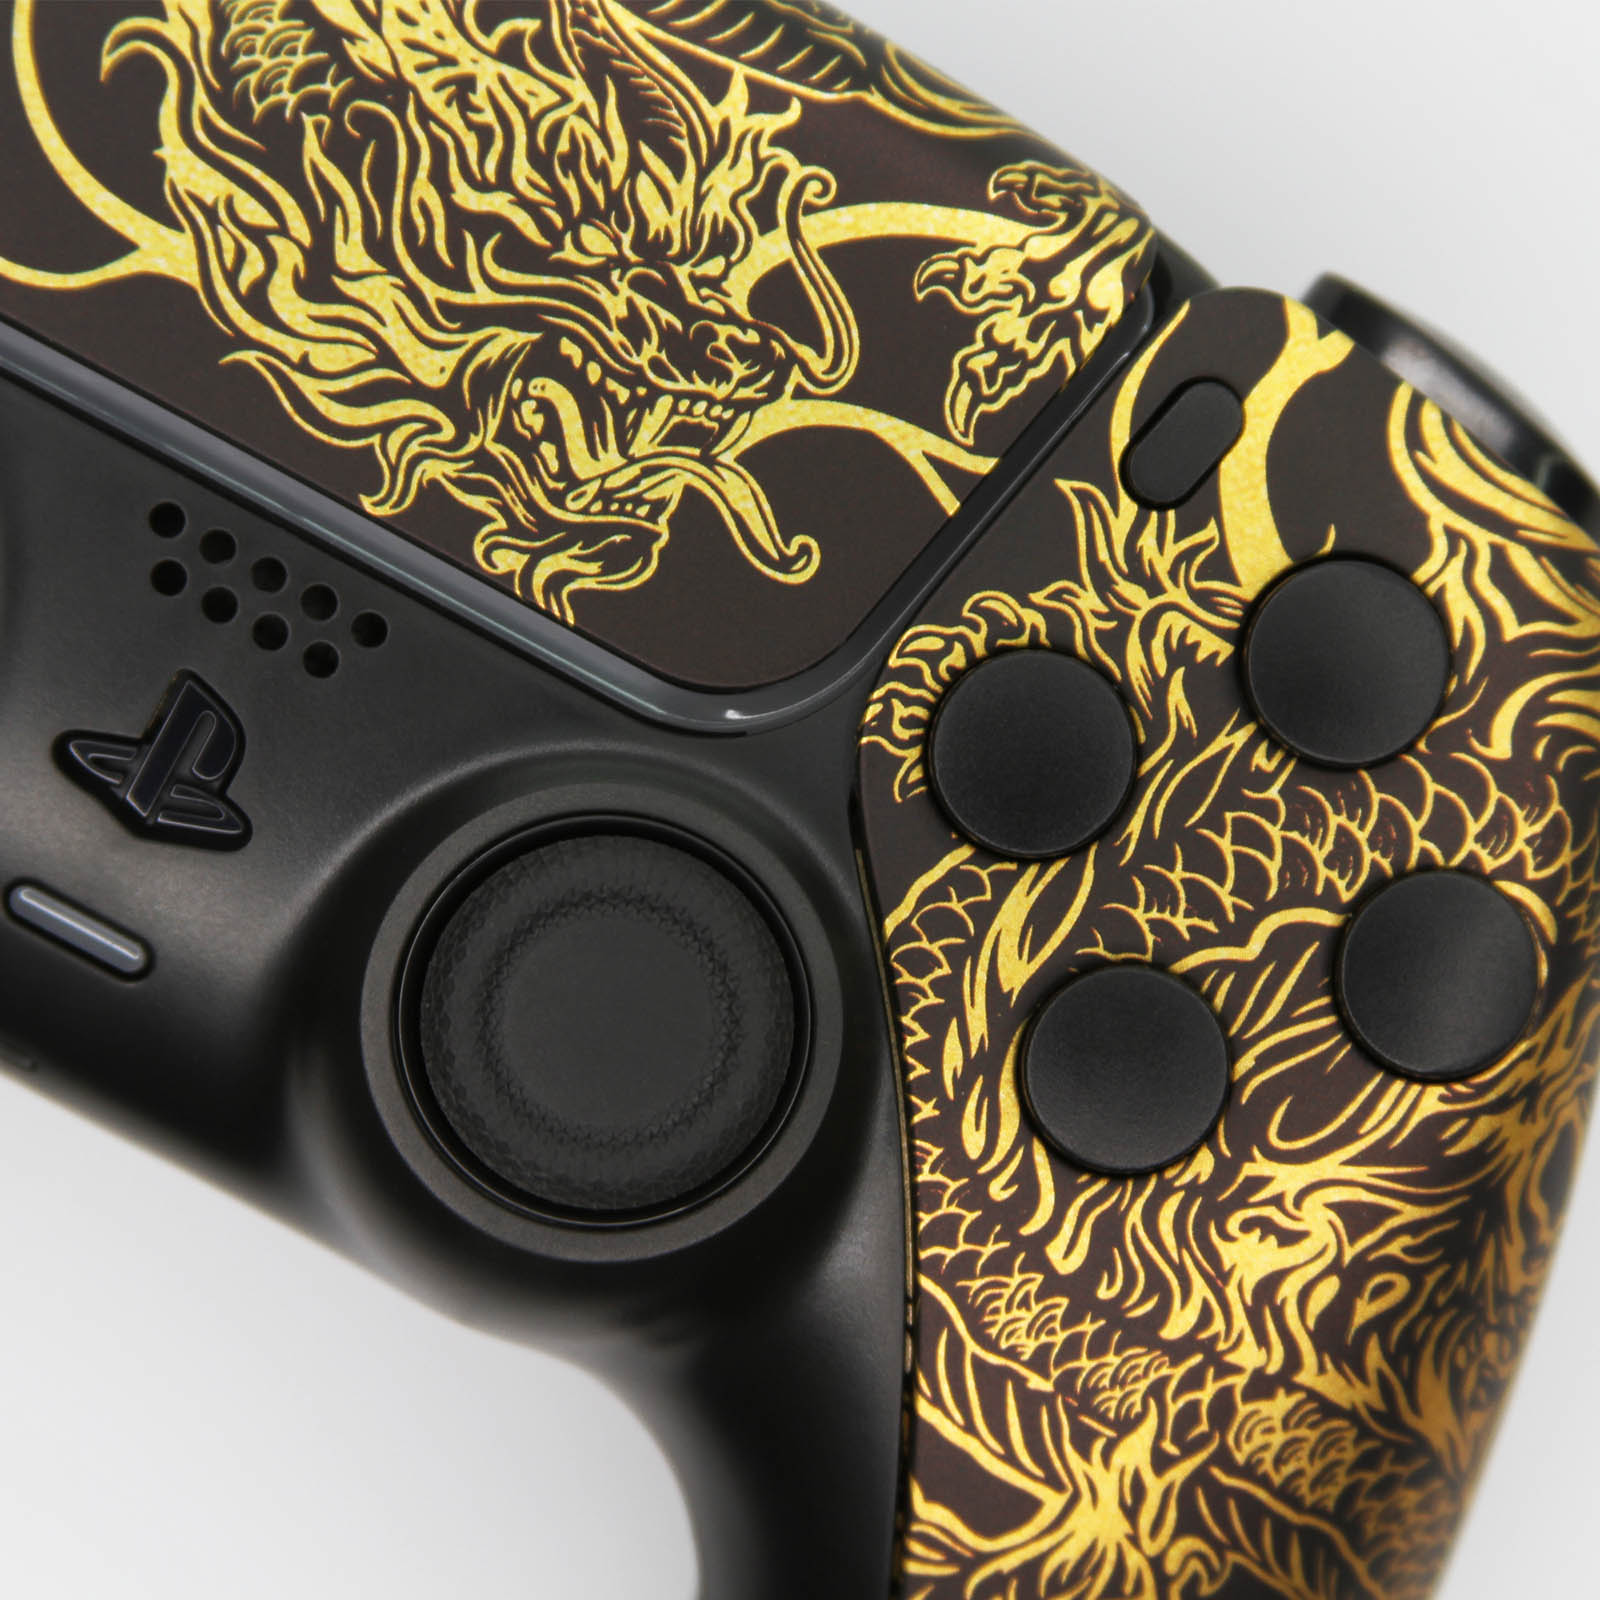 Golden Dragon Sony x Killscreen DualSense Playstation 5 PS5